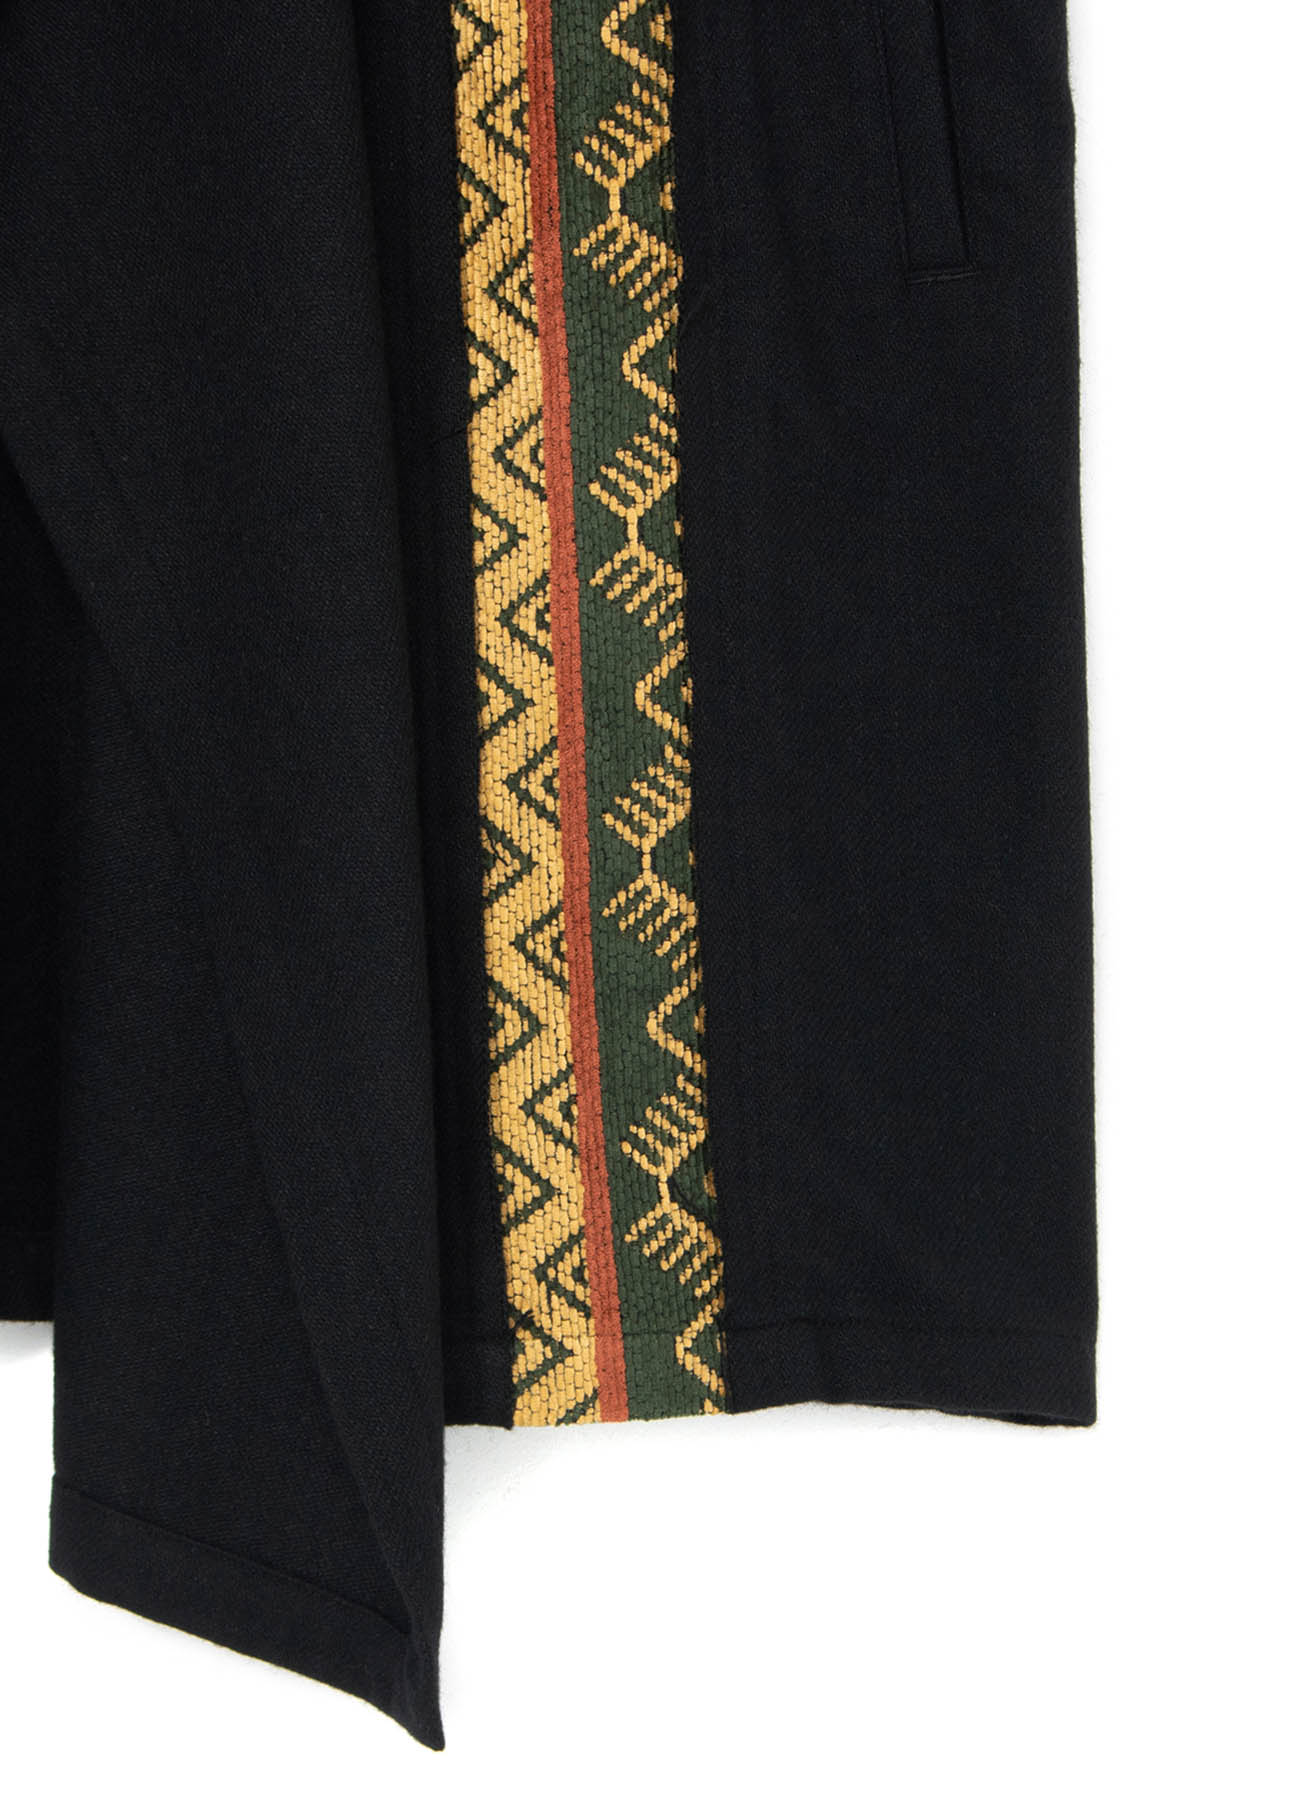 Flannel+Ecuadorian Woven Braid Switch Coat